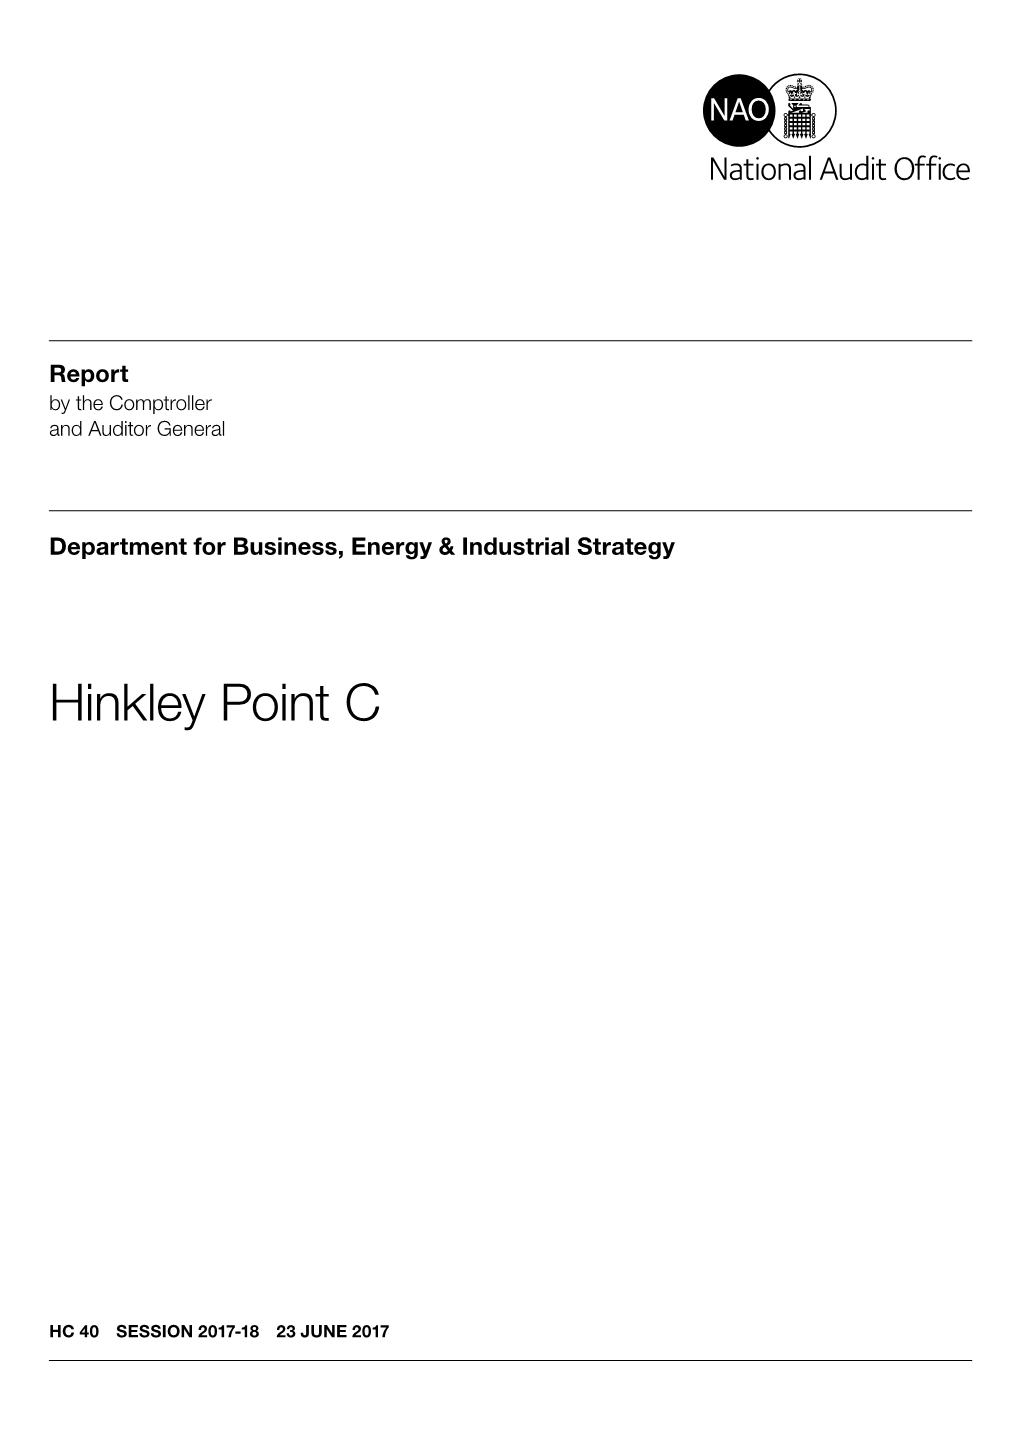 Hinkley Point C